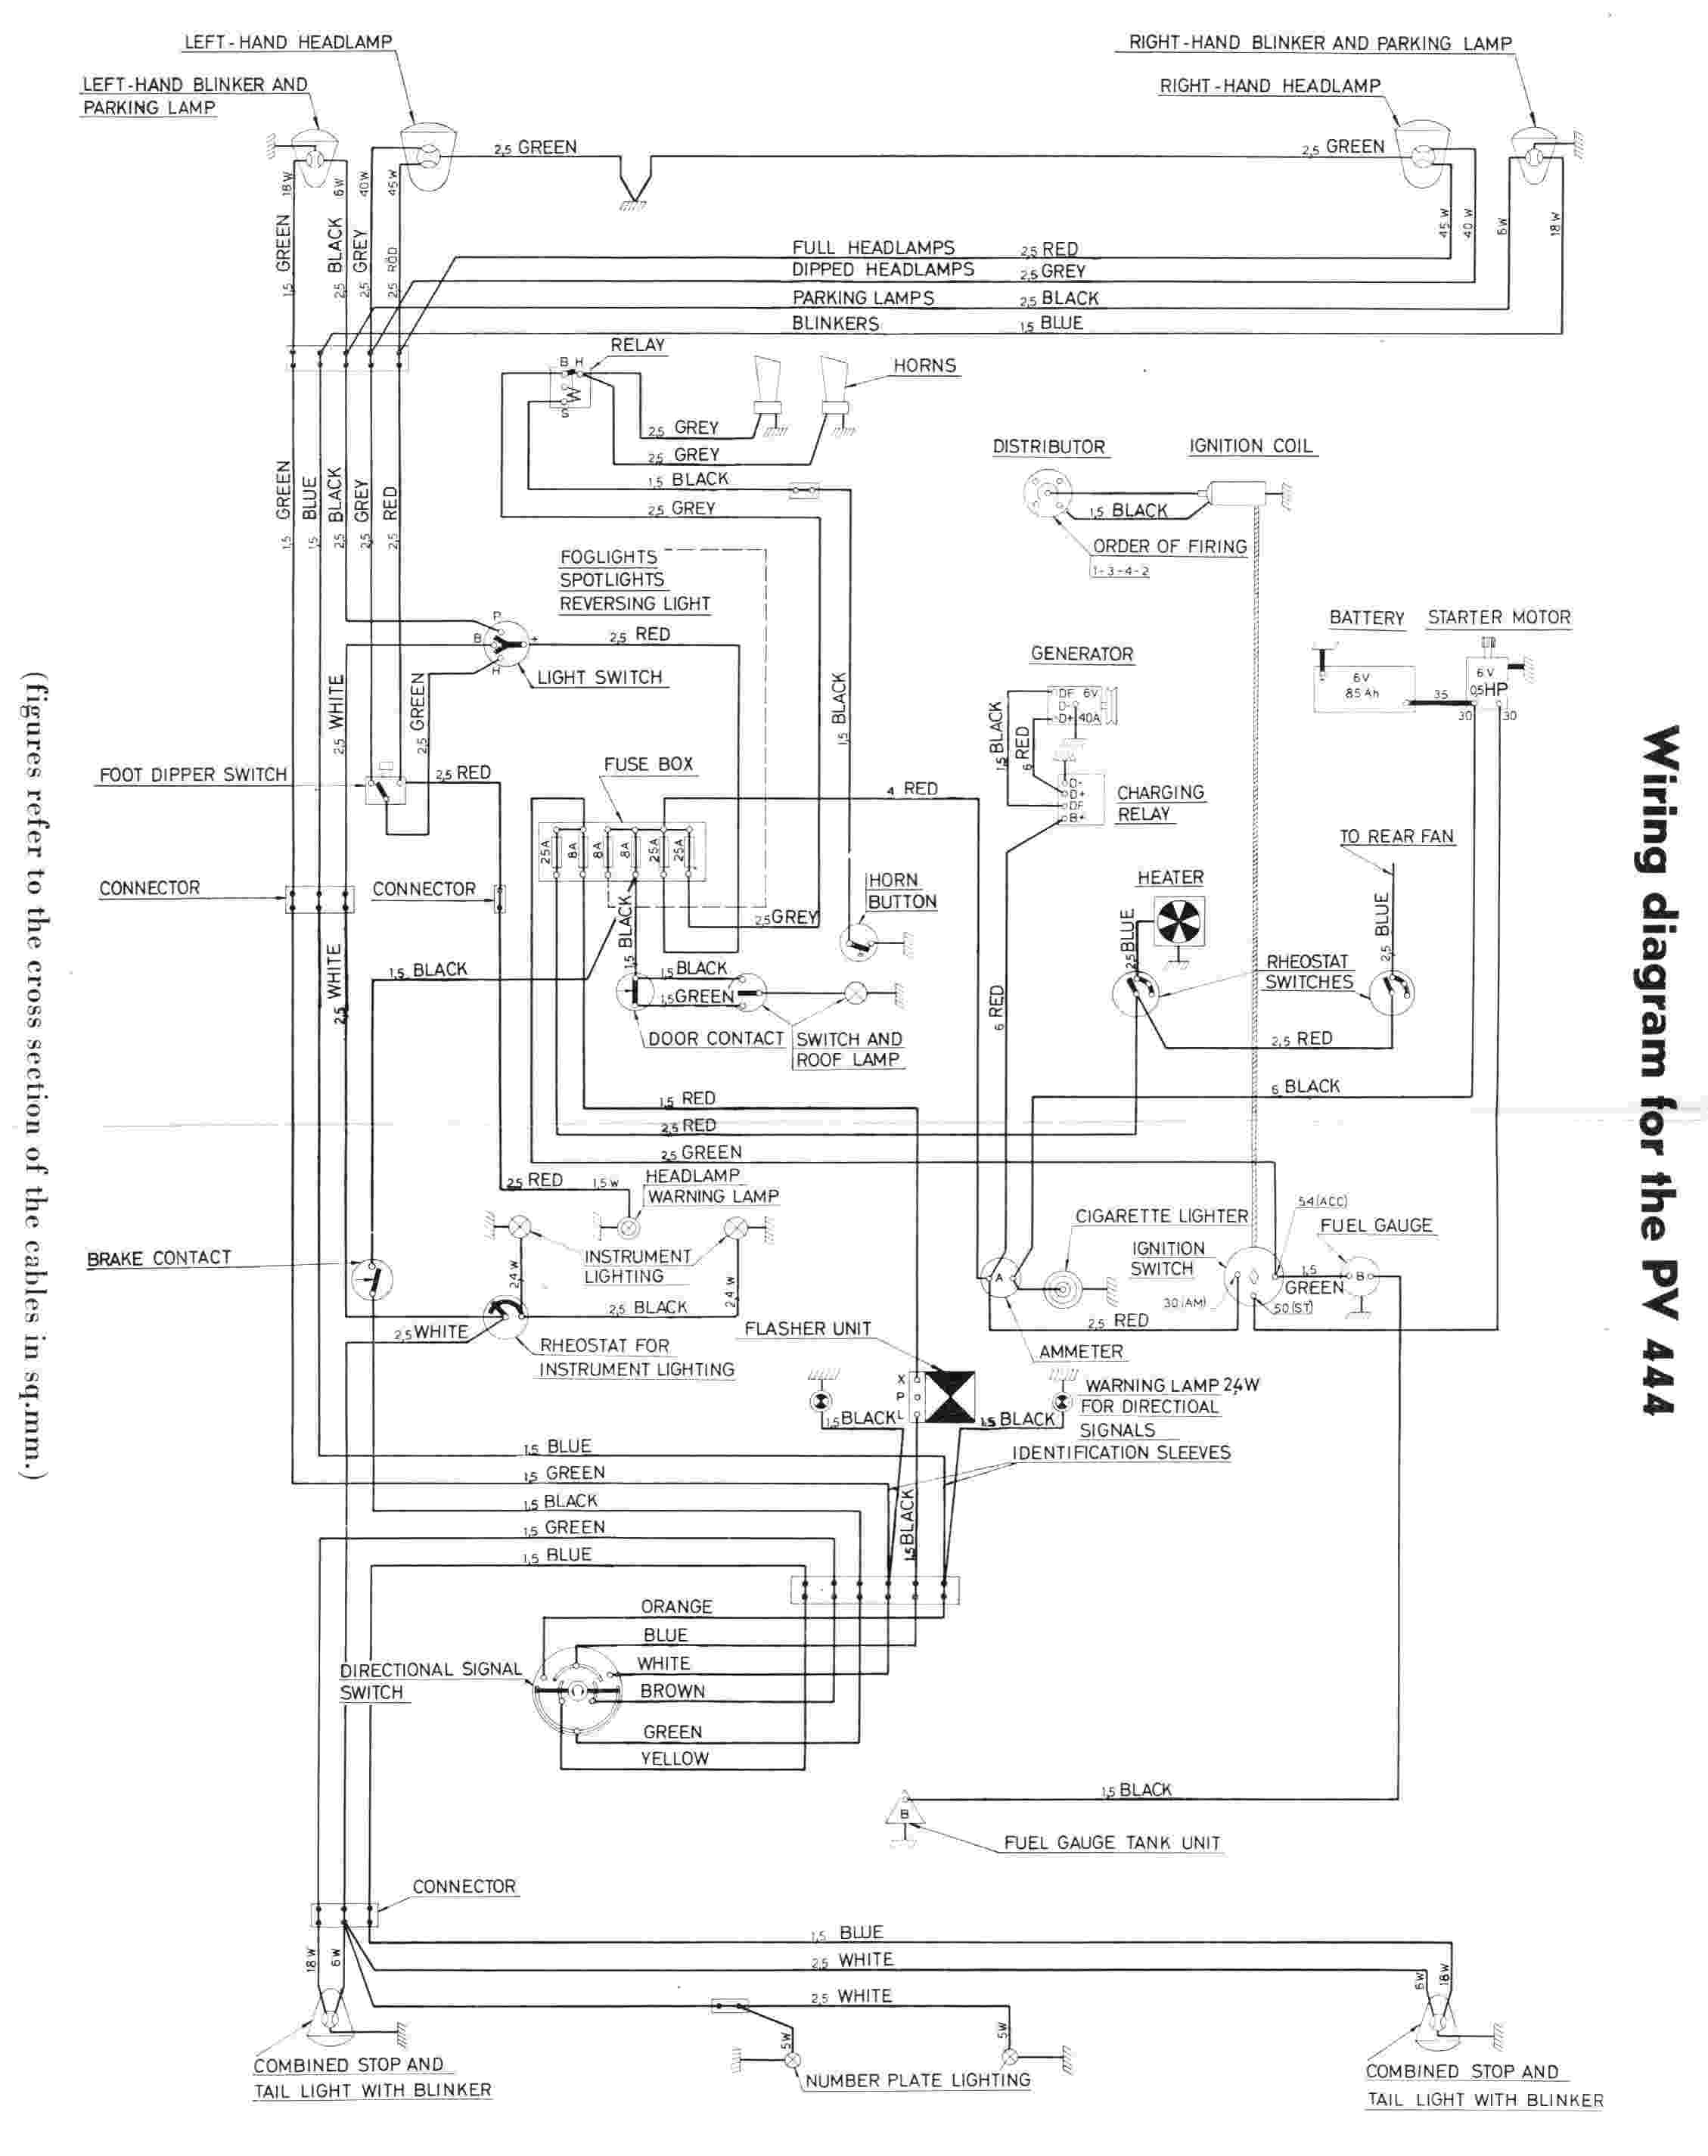 electrical-wiring-diagram-of-volvo-pv444.jpg